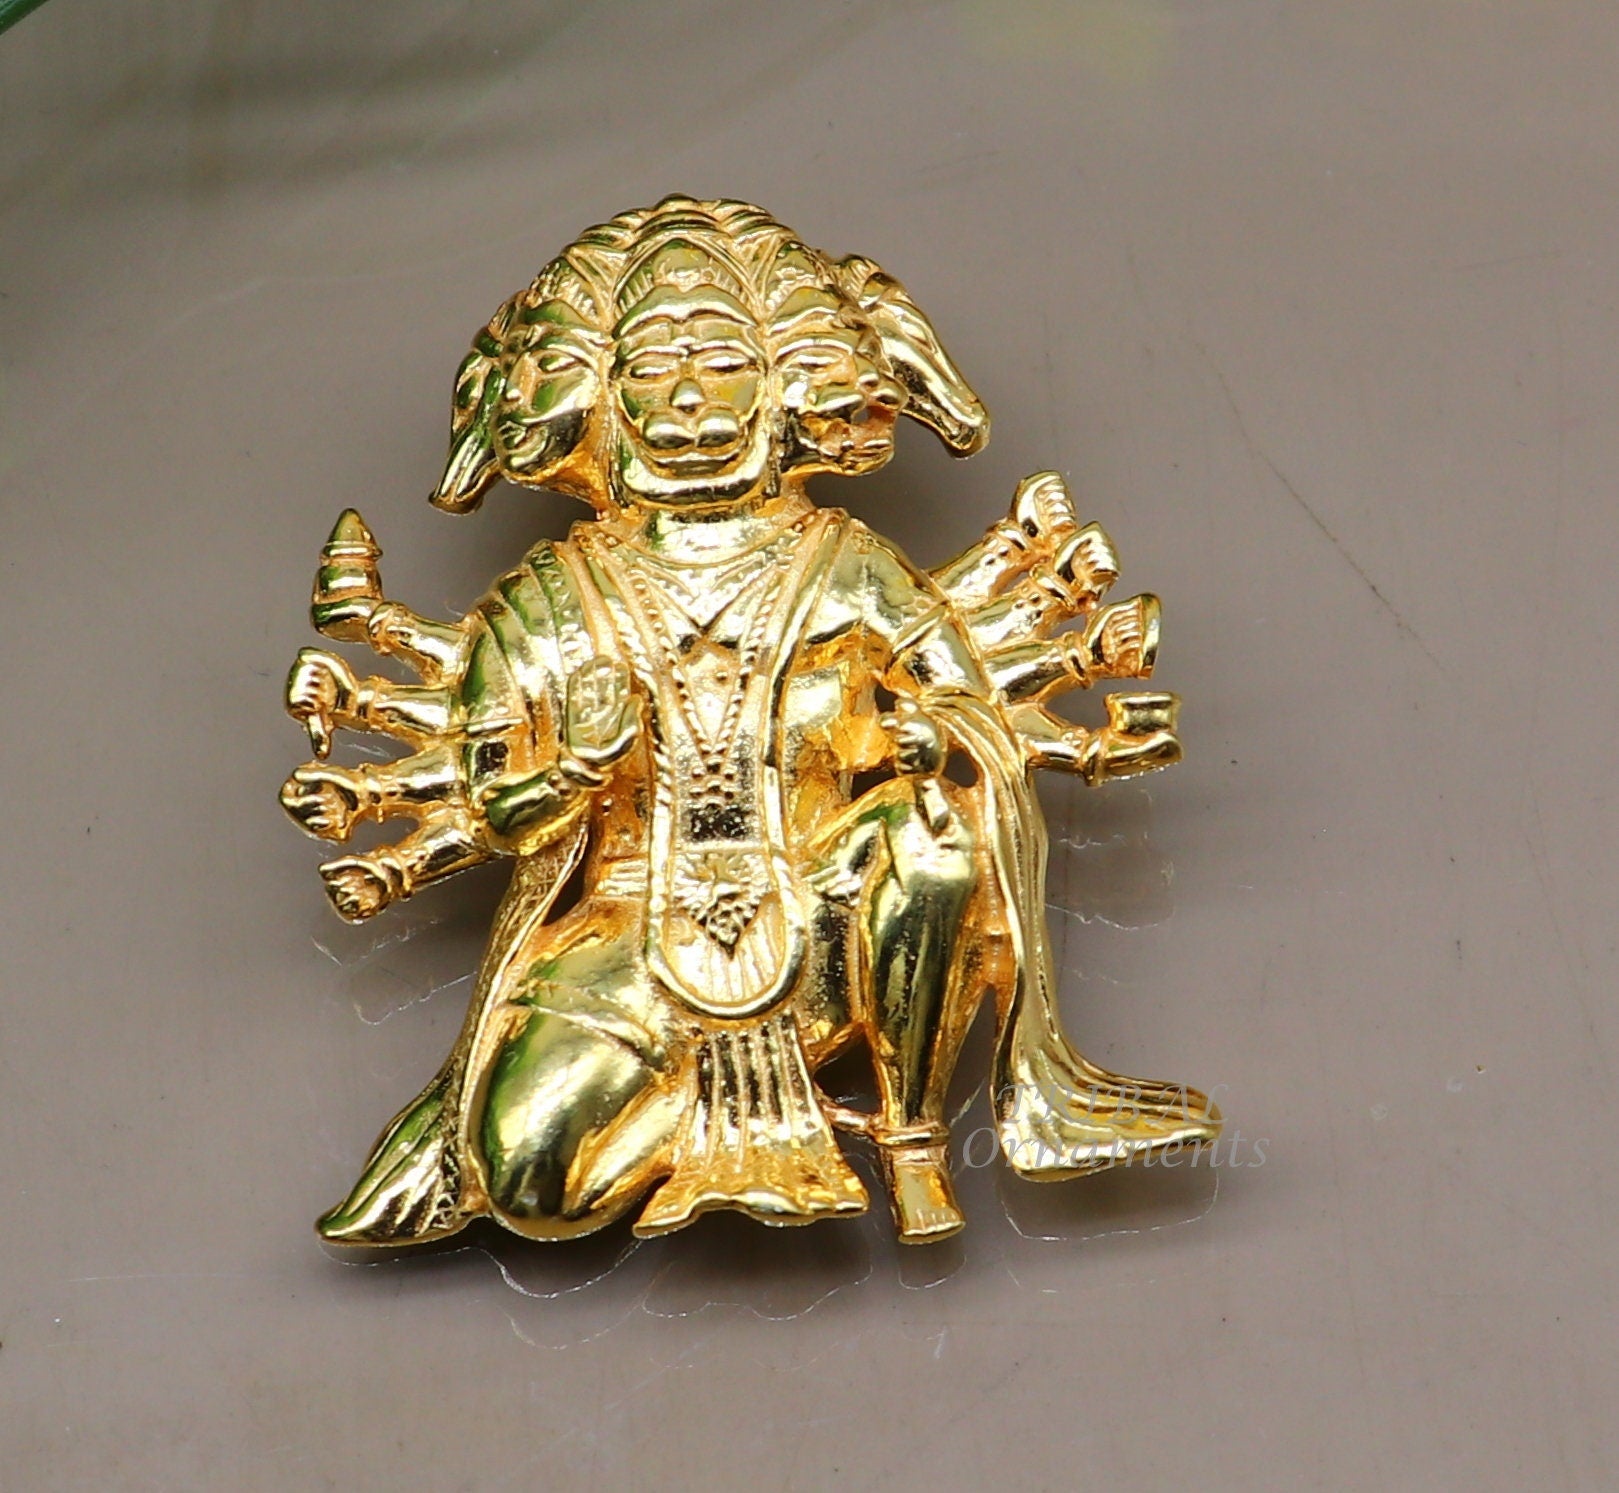 Pure 925 sterling silver handmade Hindu god Lord Panchmukhi Hanuman Gold polished pendant, amazing designer pendant unisex jewelry nsp542 - TRIBAL ORNAMENTS